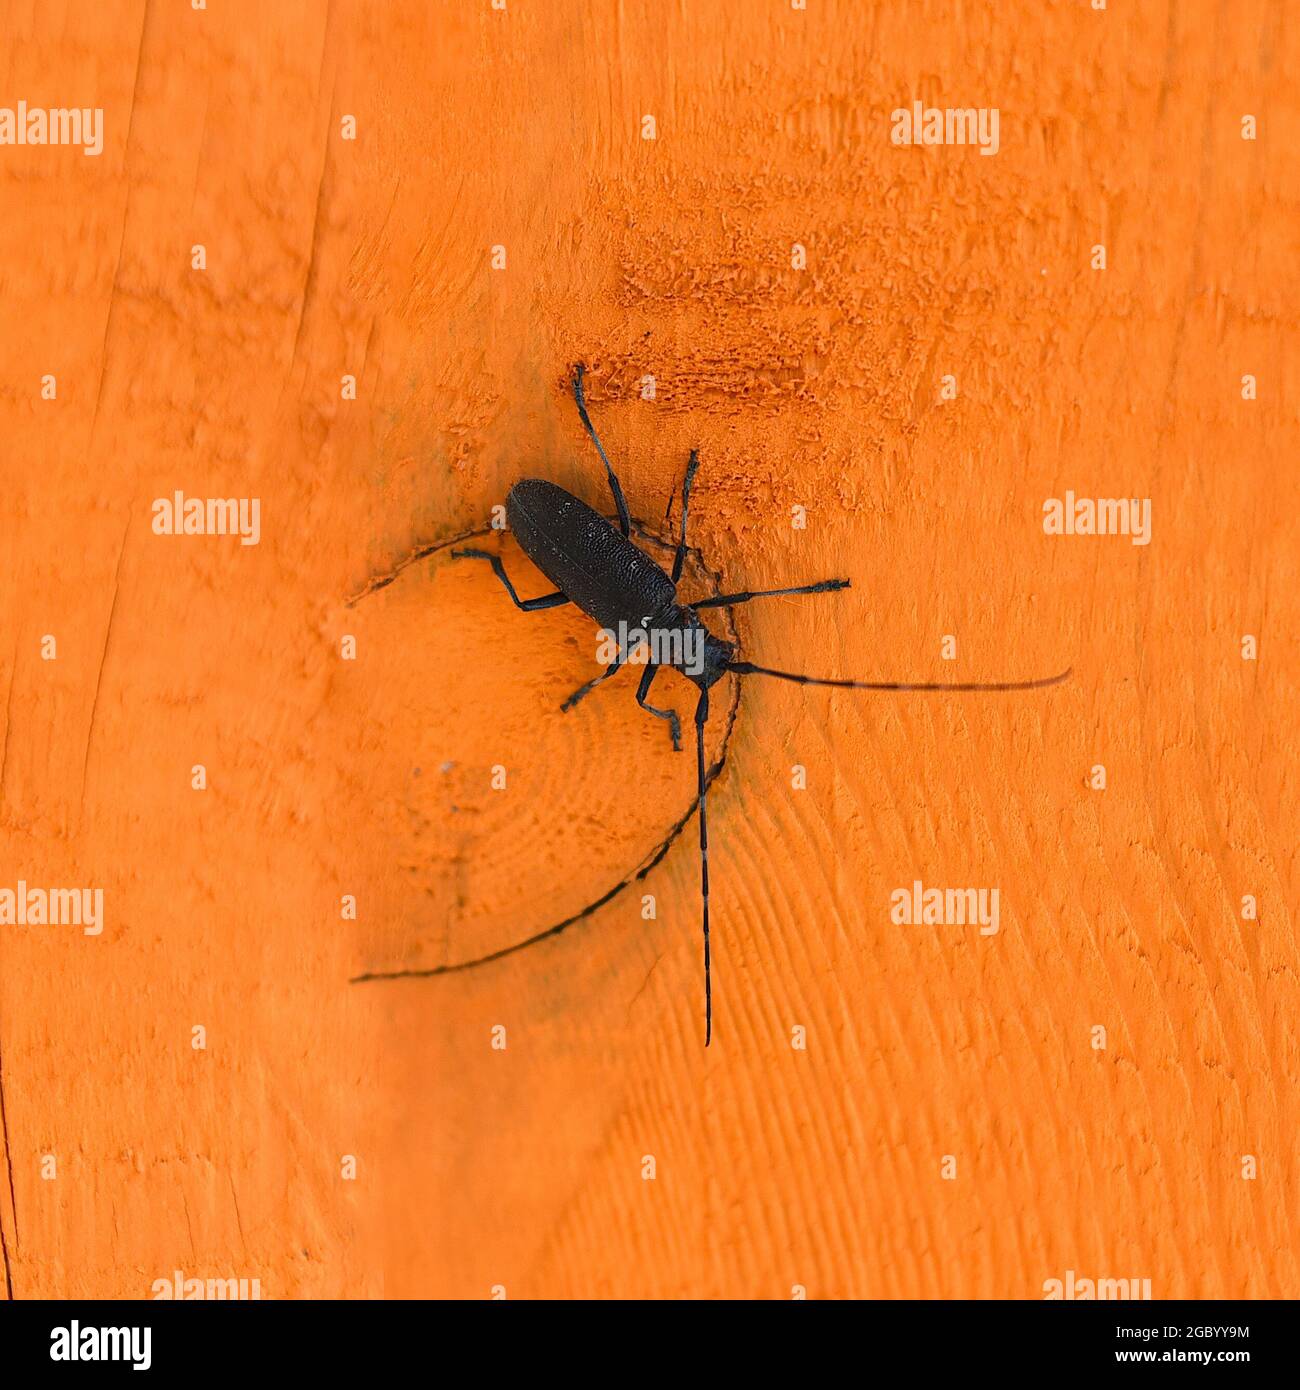 Black Longhorn beetle on orange wooden surface Stock Photo